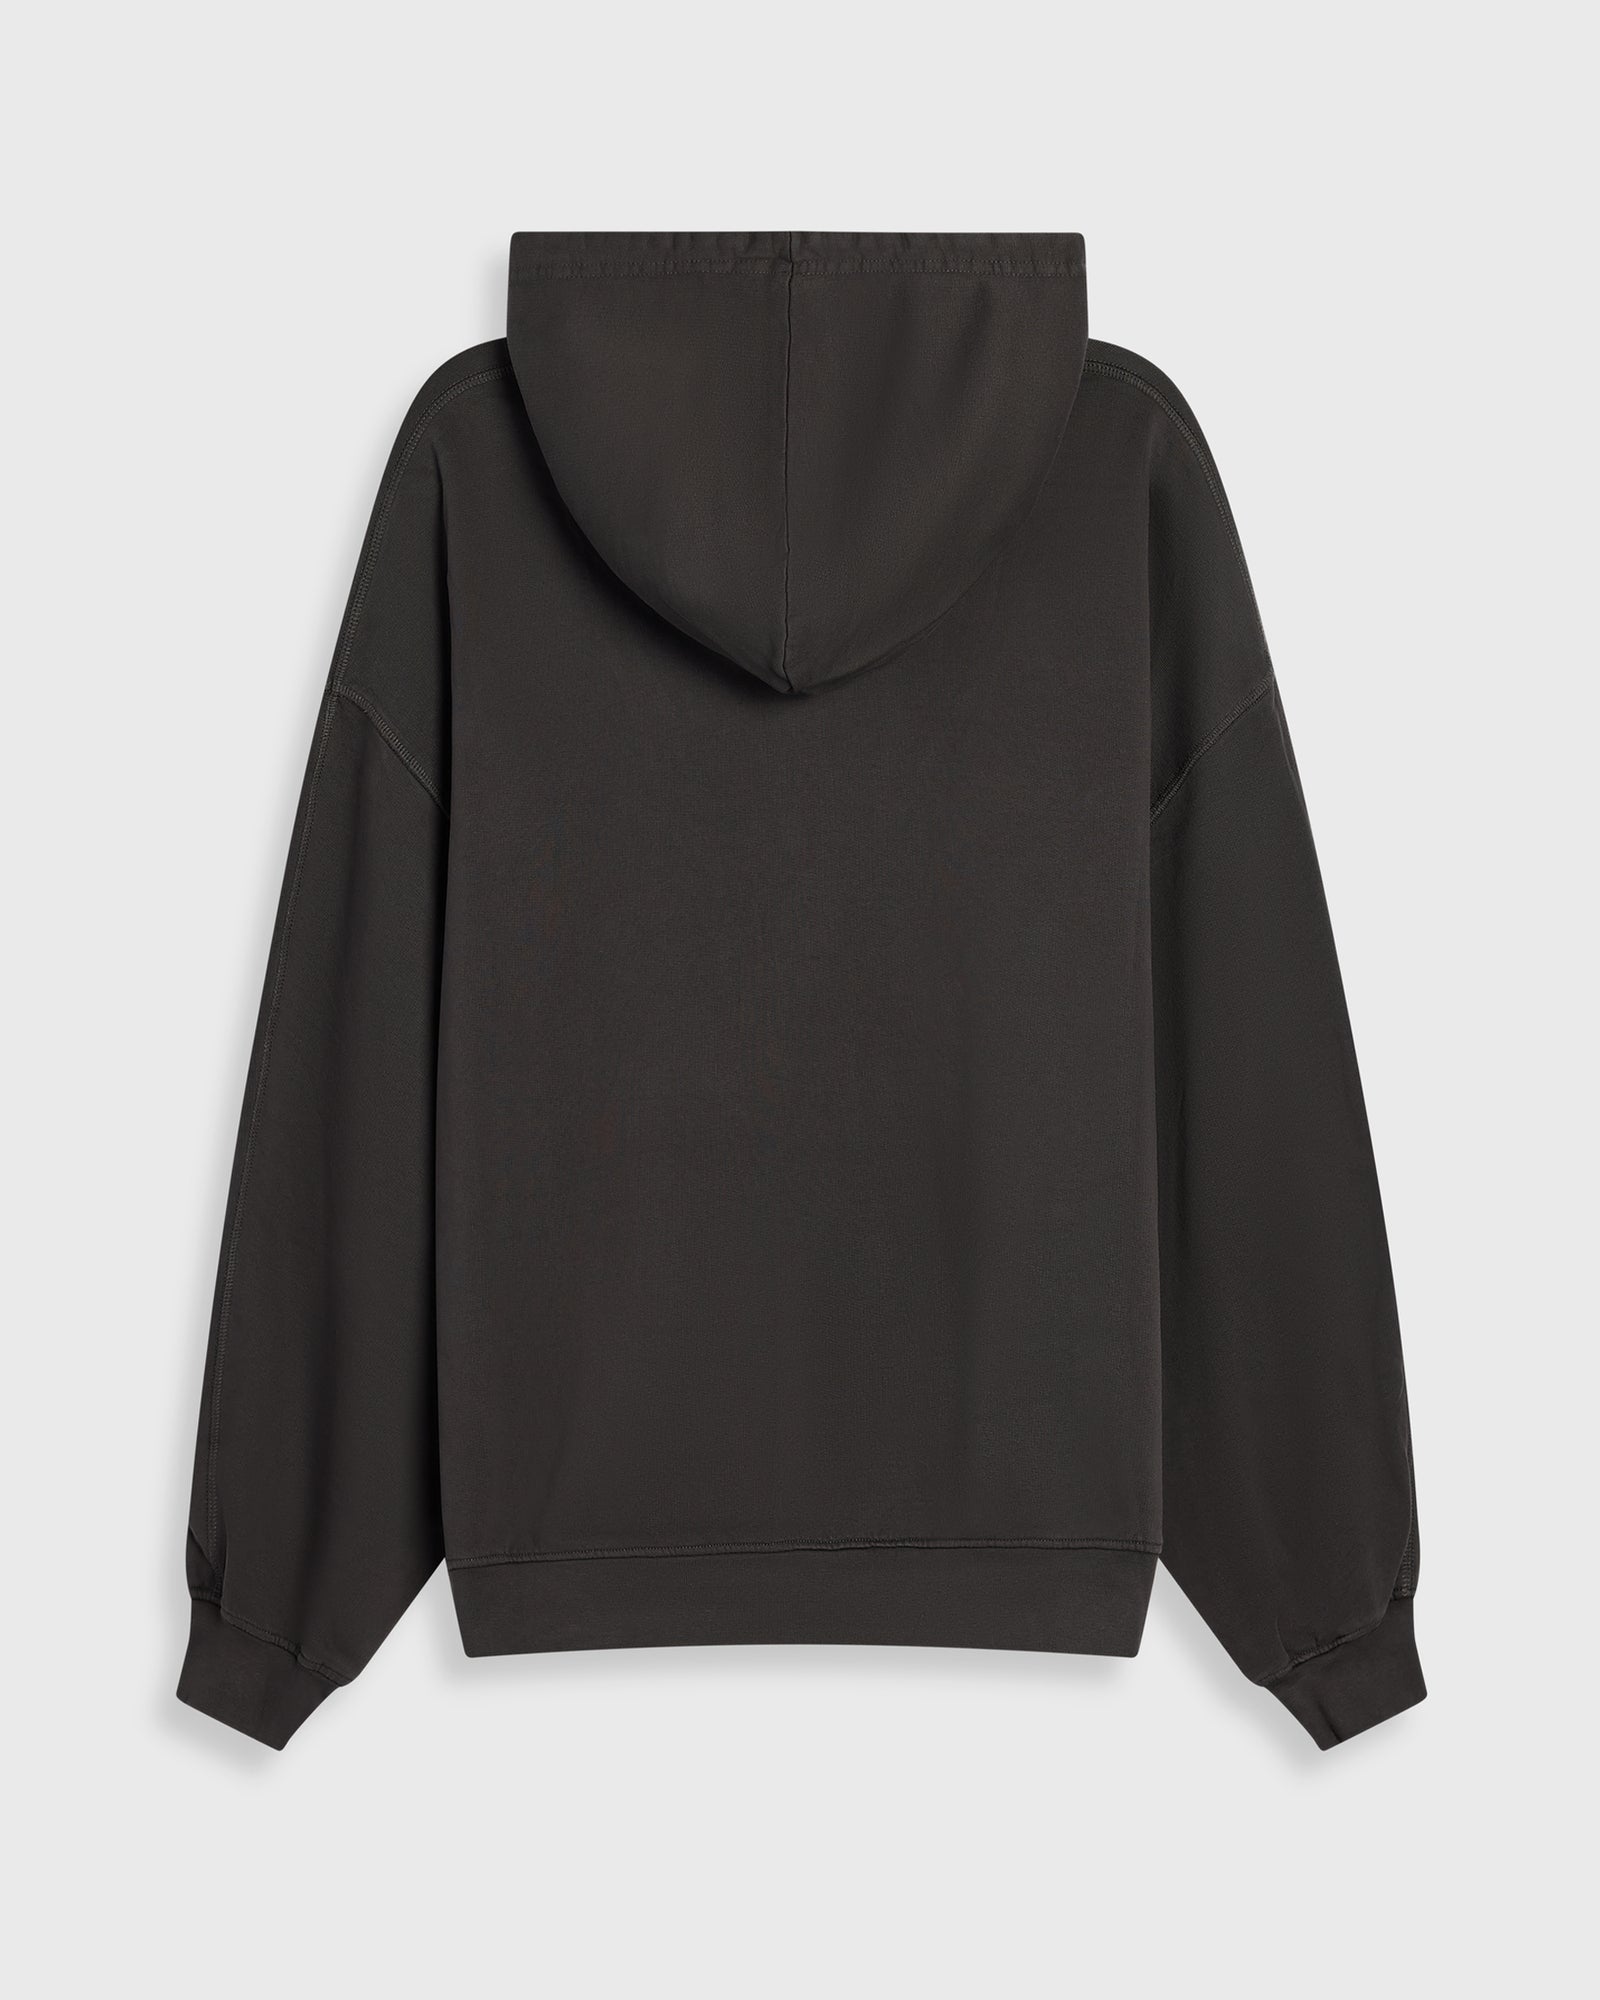 black sweat set hoody & sweatpants oversized unisex fit for men & women high-quality 100% cotton